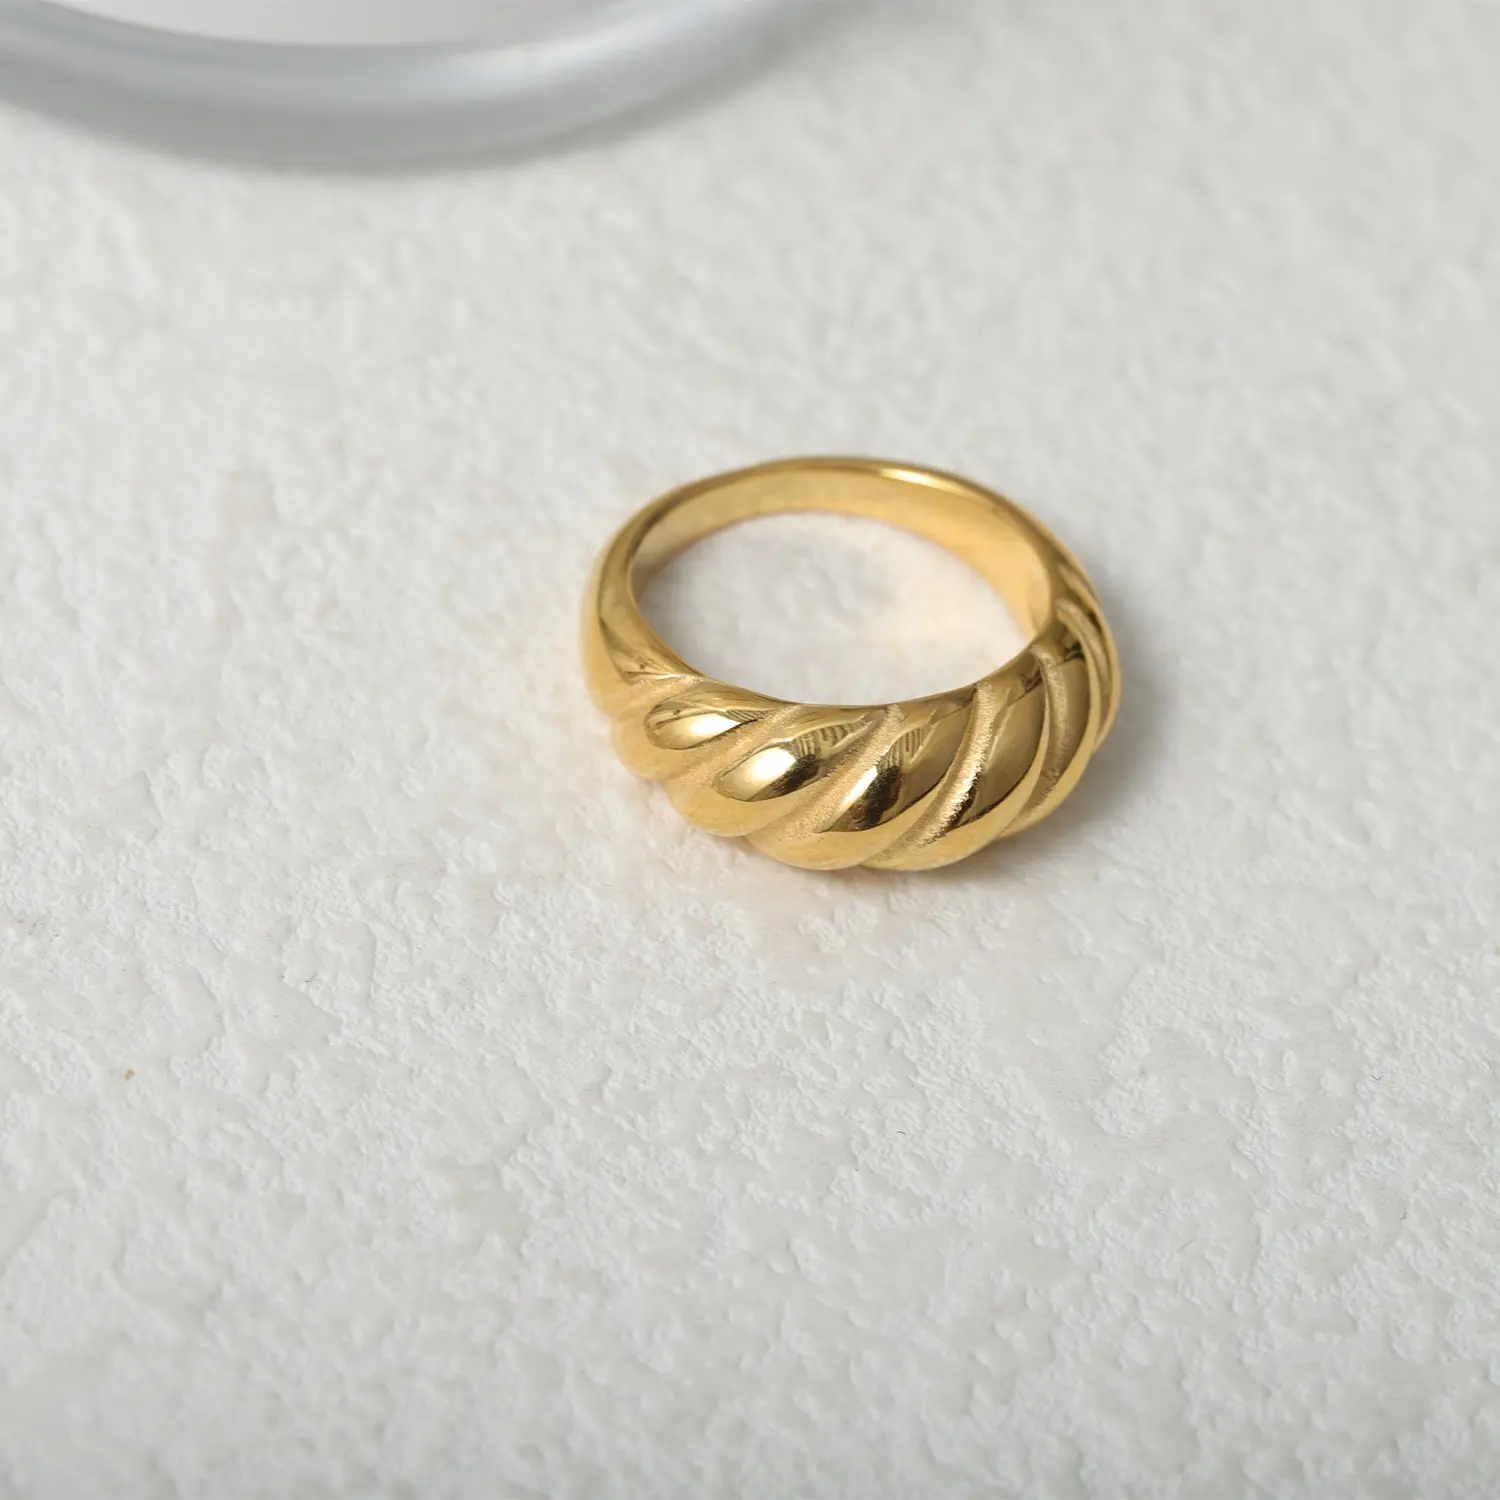 Wholesale New Creative Retro Simple Fashion Jewelry Rings Titanium Steel Twist Unisex Personalized Ring